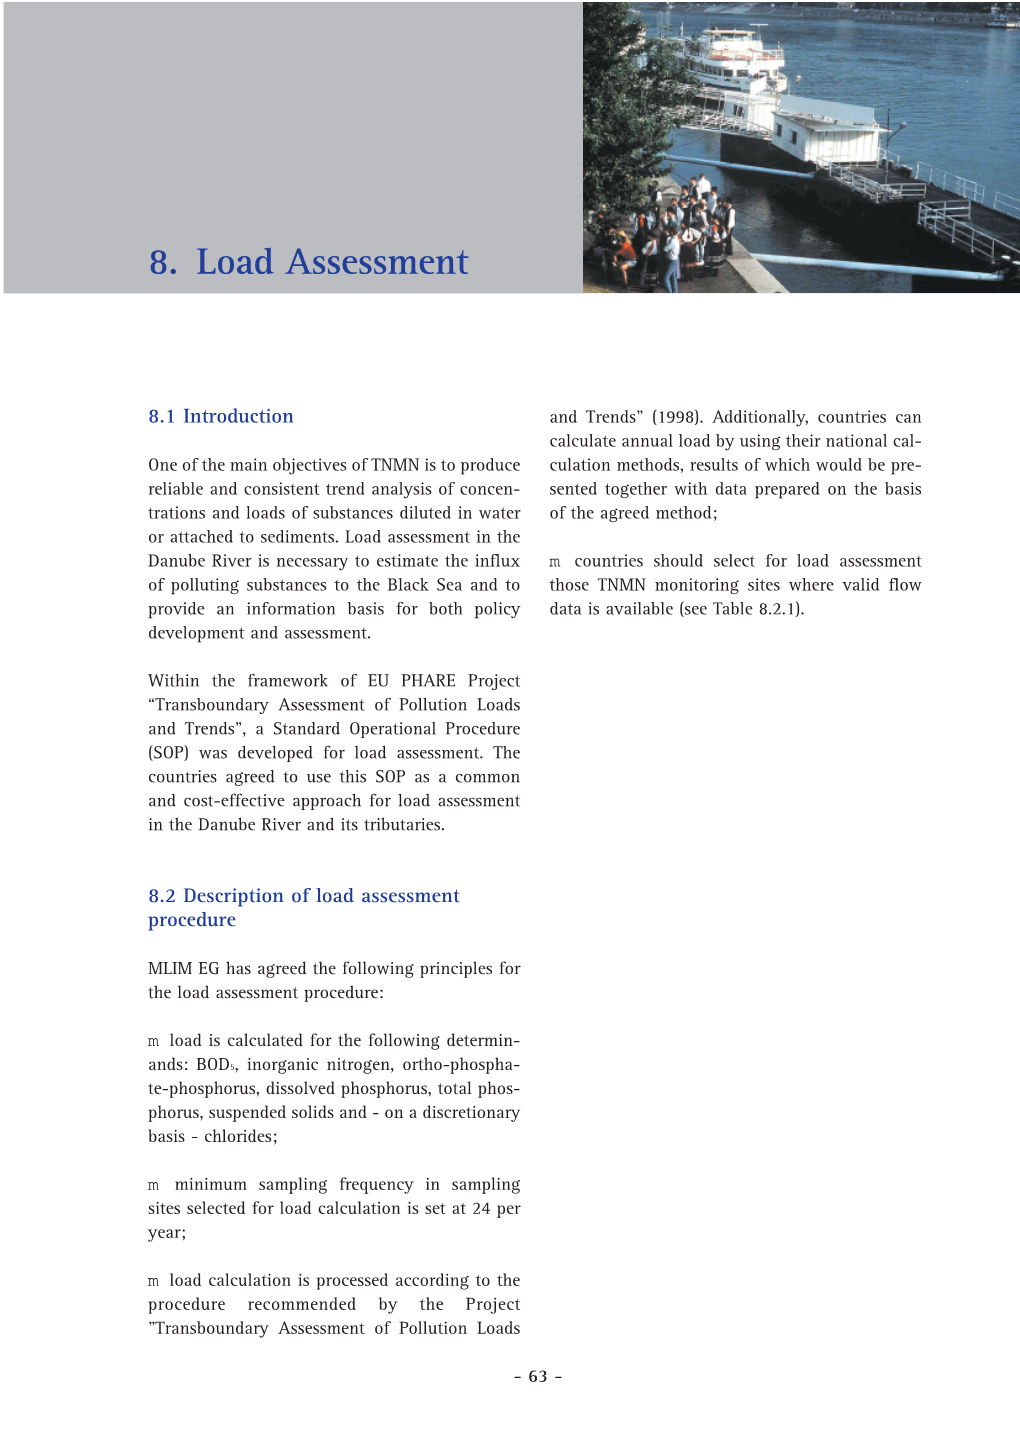 8. Load Assessment